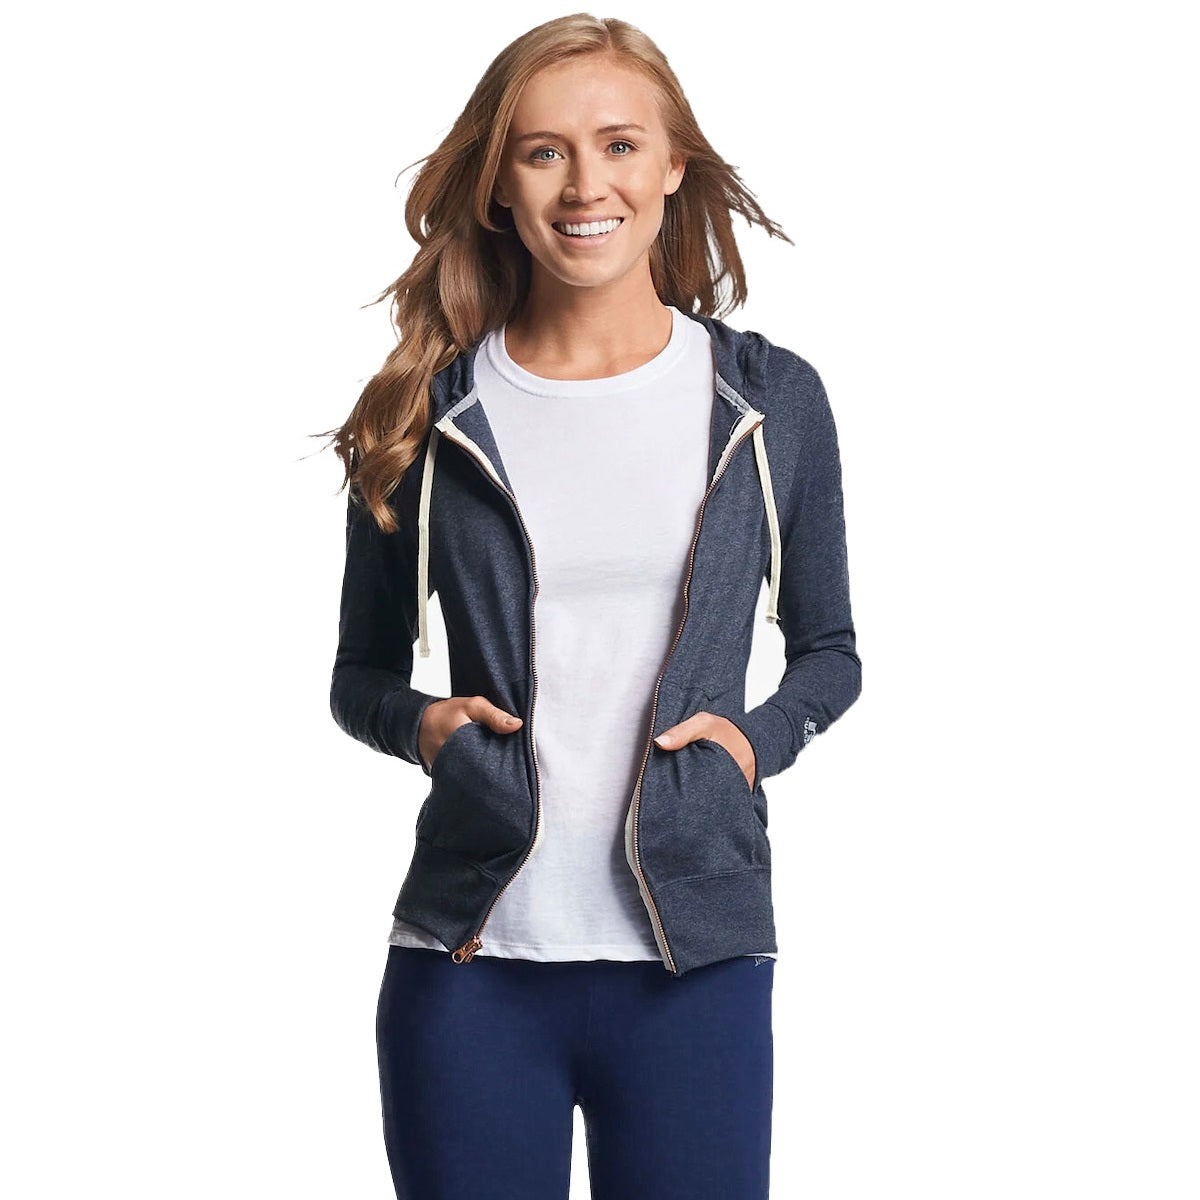 Russell Athletic Women’s Hoodie – Full Zip, Light Cotton Blend